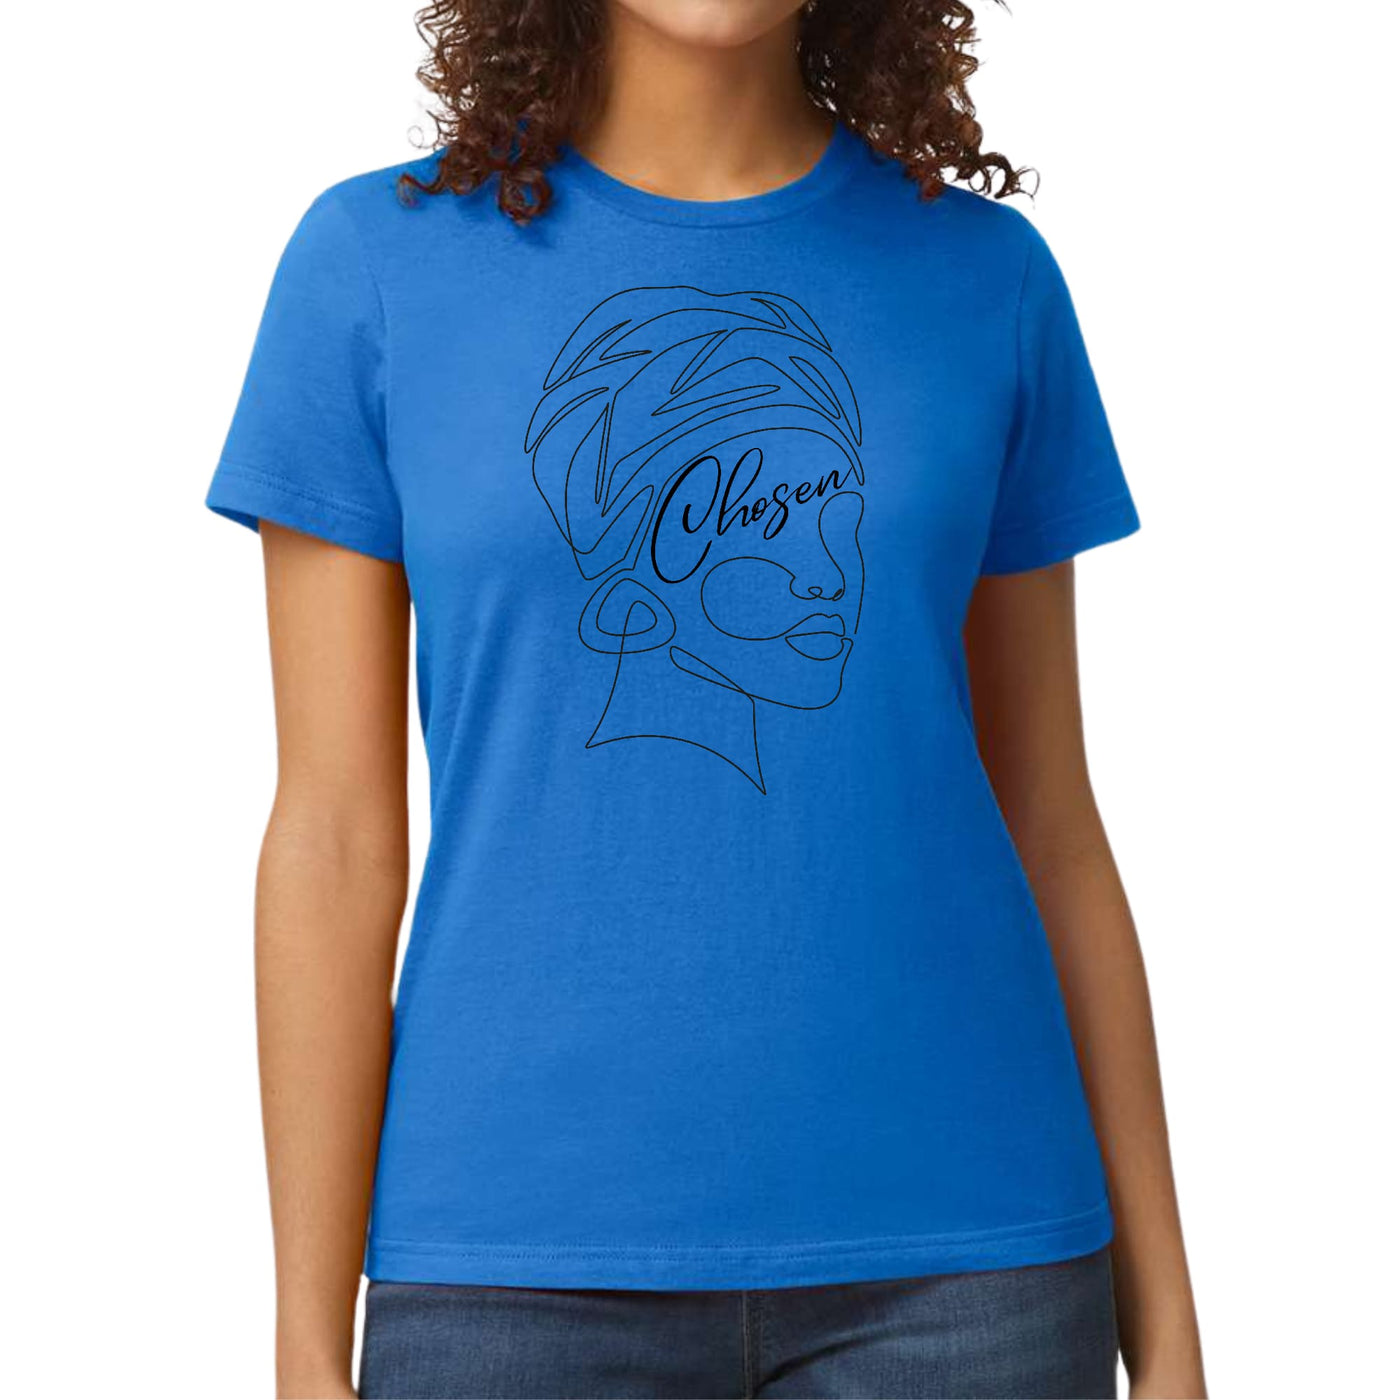 Womens Graphic T-shirt Say It Soul ’chosen’ Black Woman Line Art, - Womens